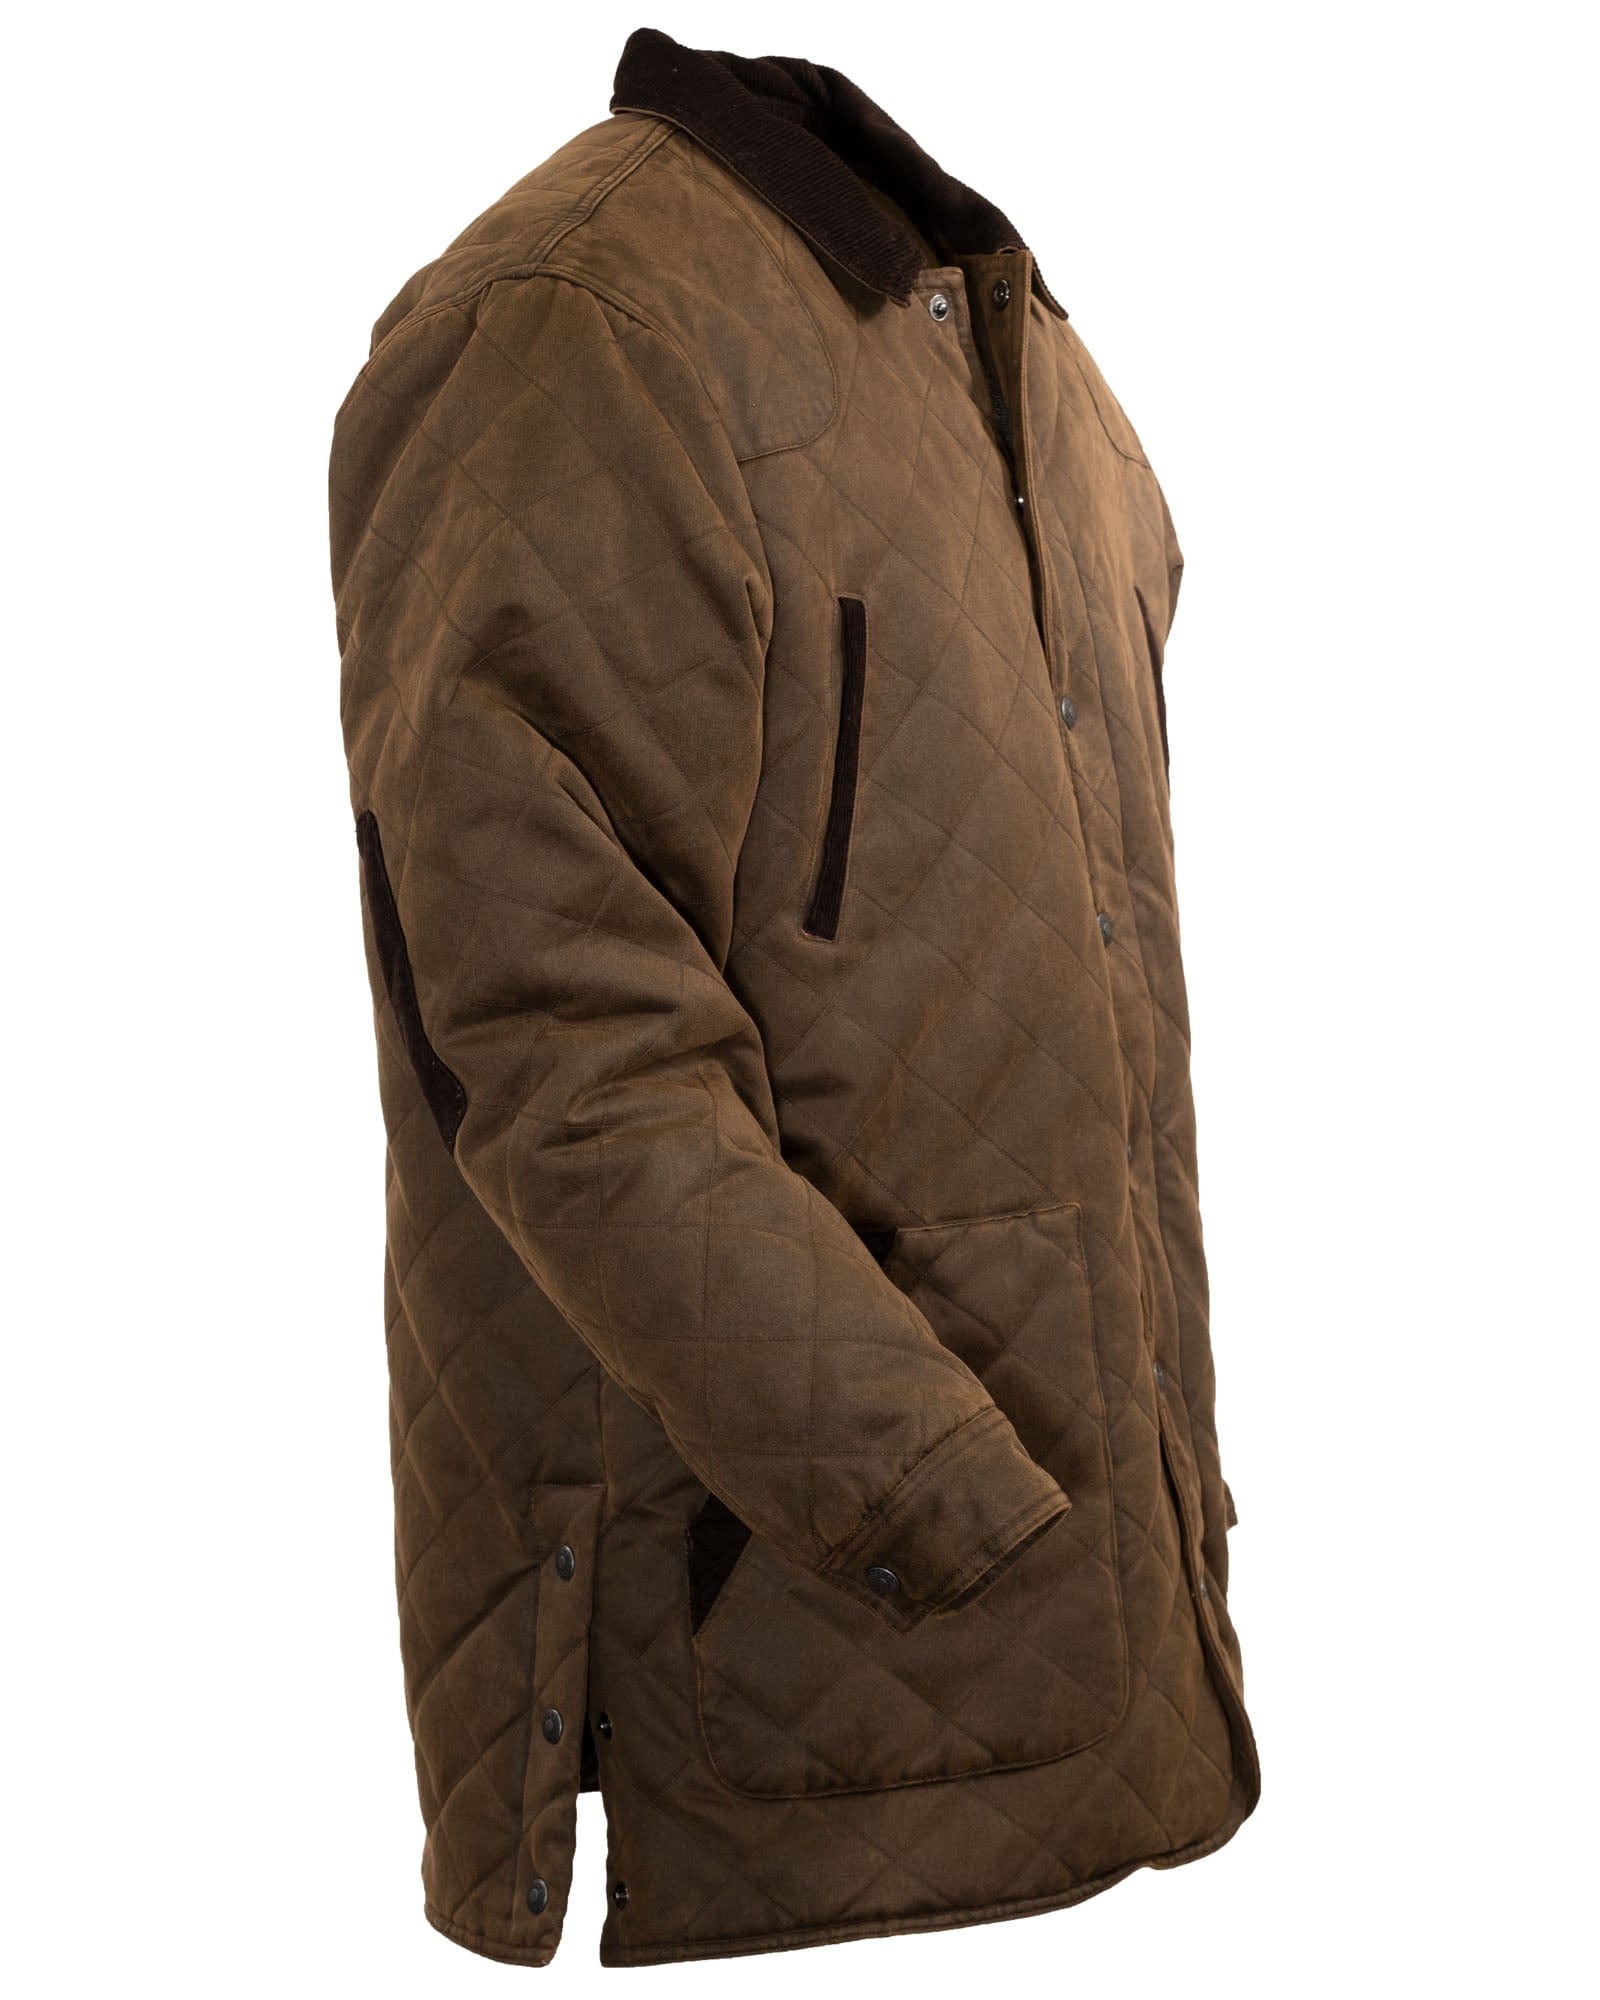 The Jacket Maker Bespoke Leather Outerwear Jackets | Hypebeast